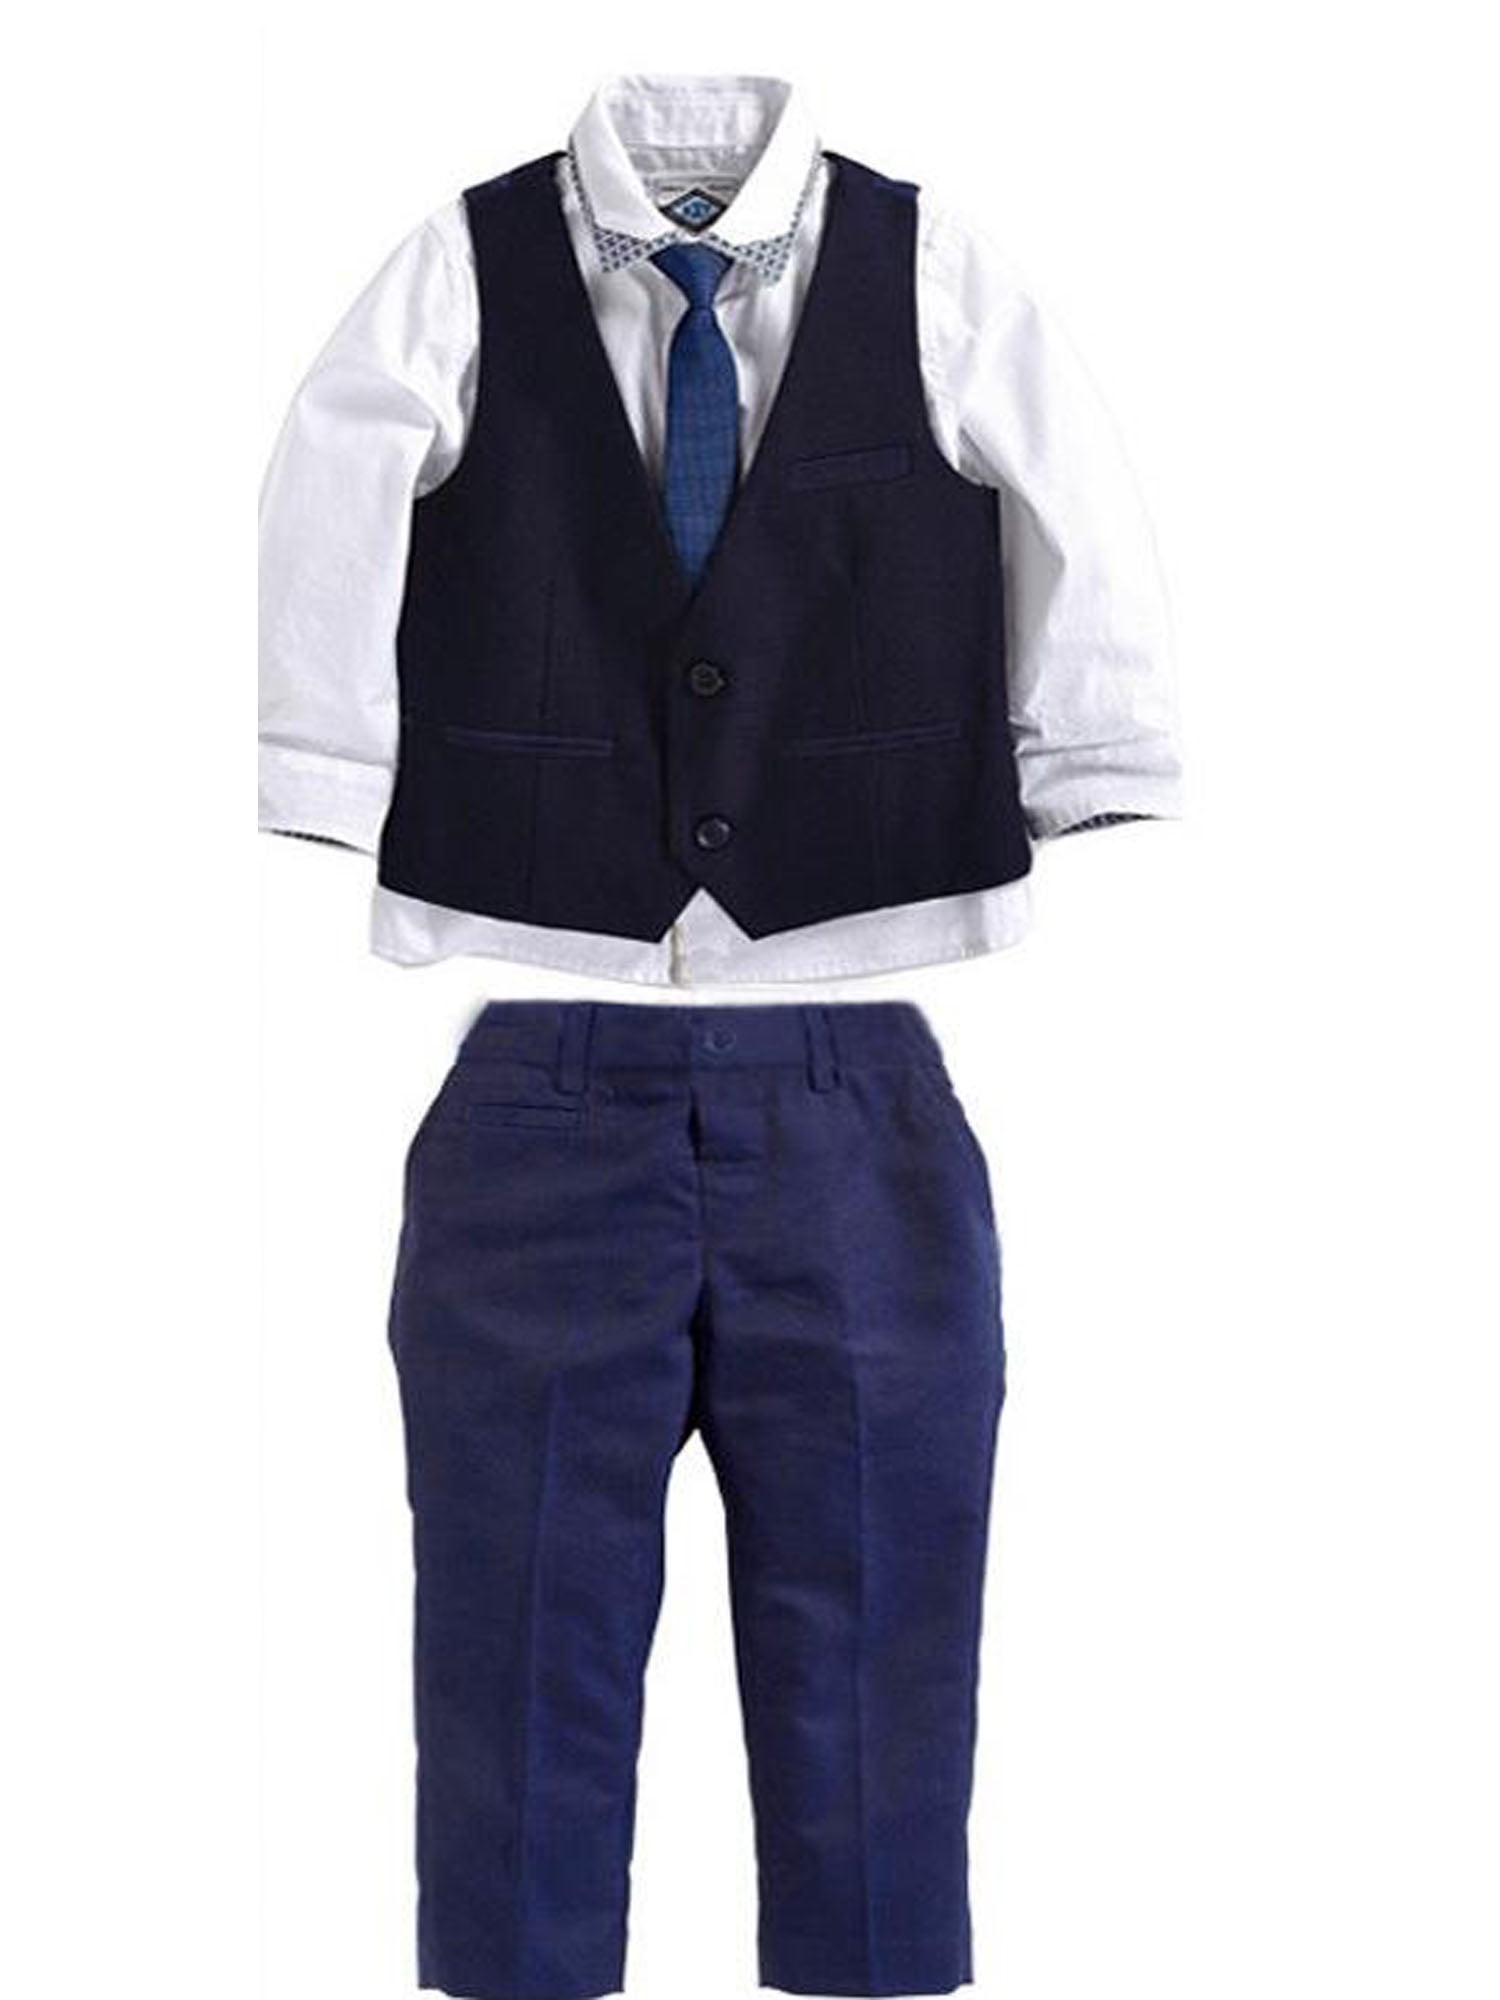 4PCS Gentleman Boys Kids Baby Waistcoat+Shirt Tops+Tie+Pants Outfits Clothes Hot 